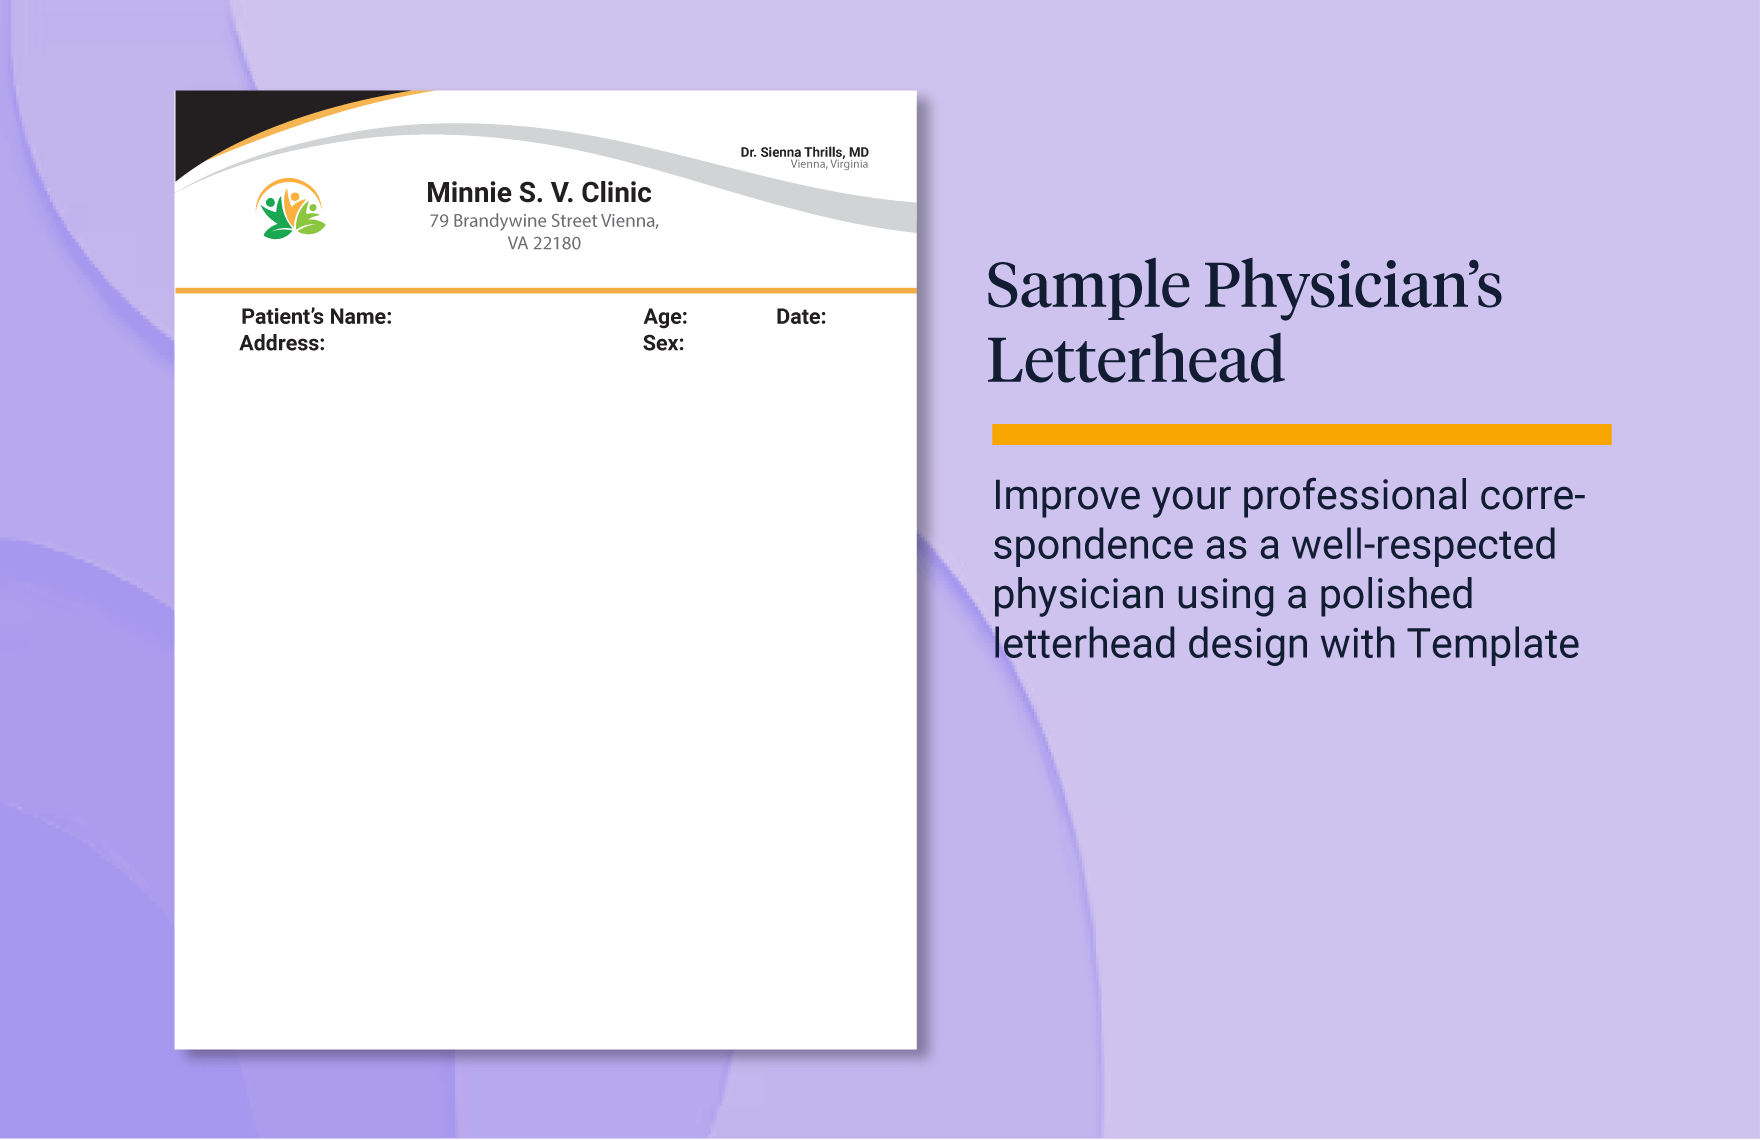 Sample Physician’s Letterhead